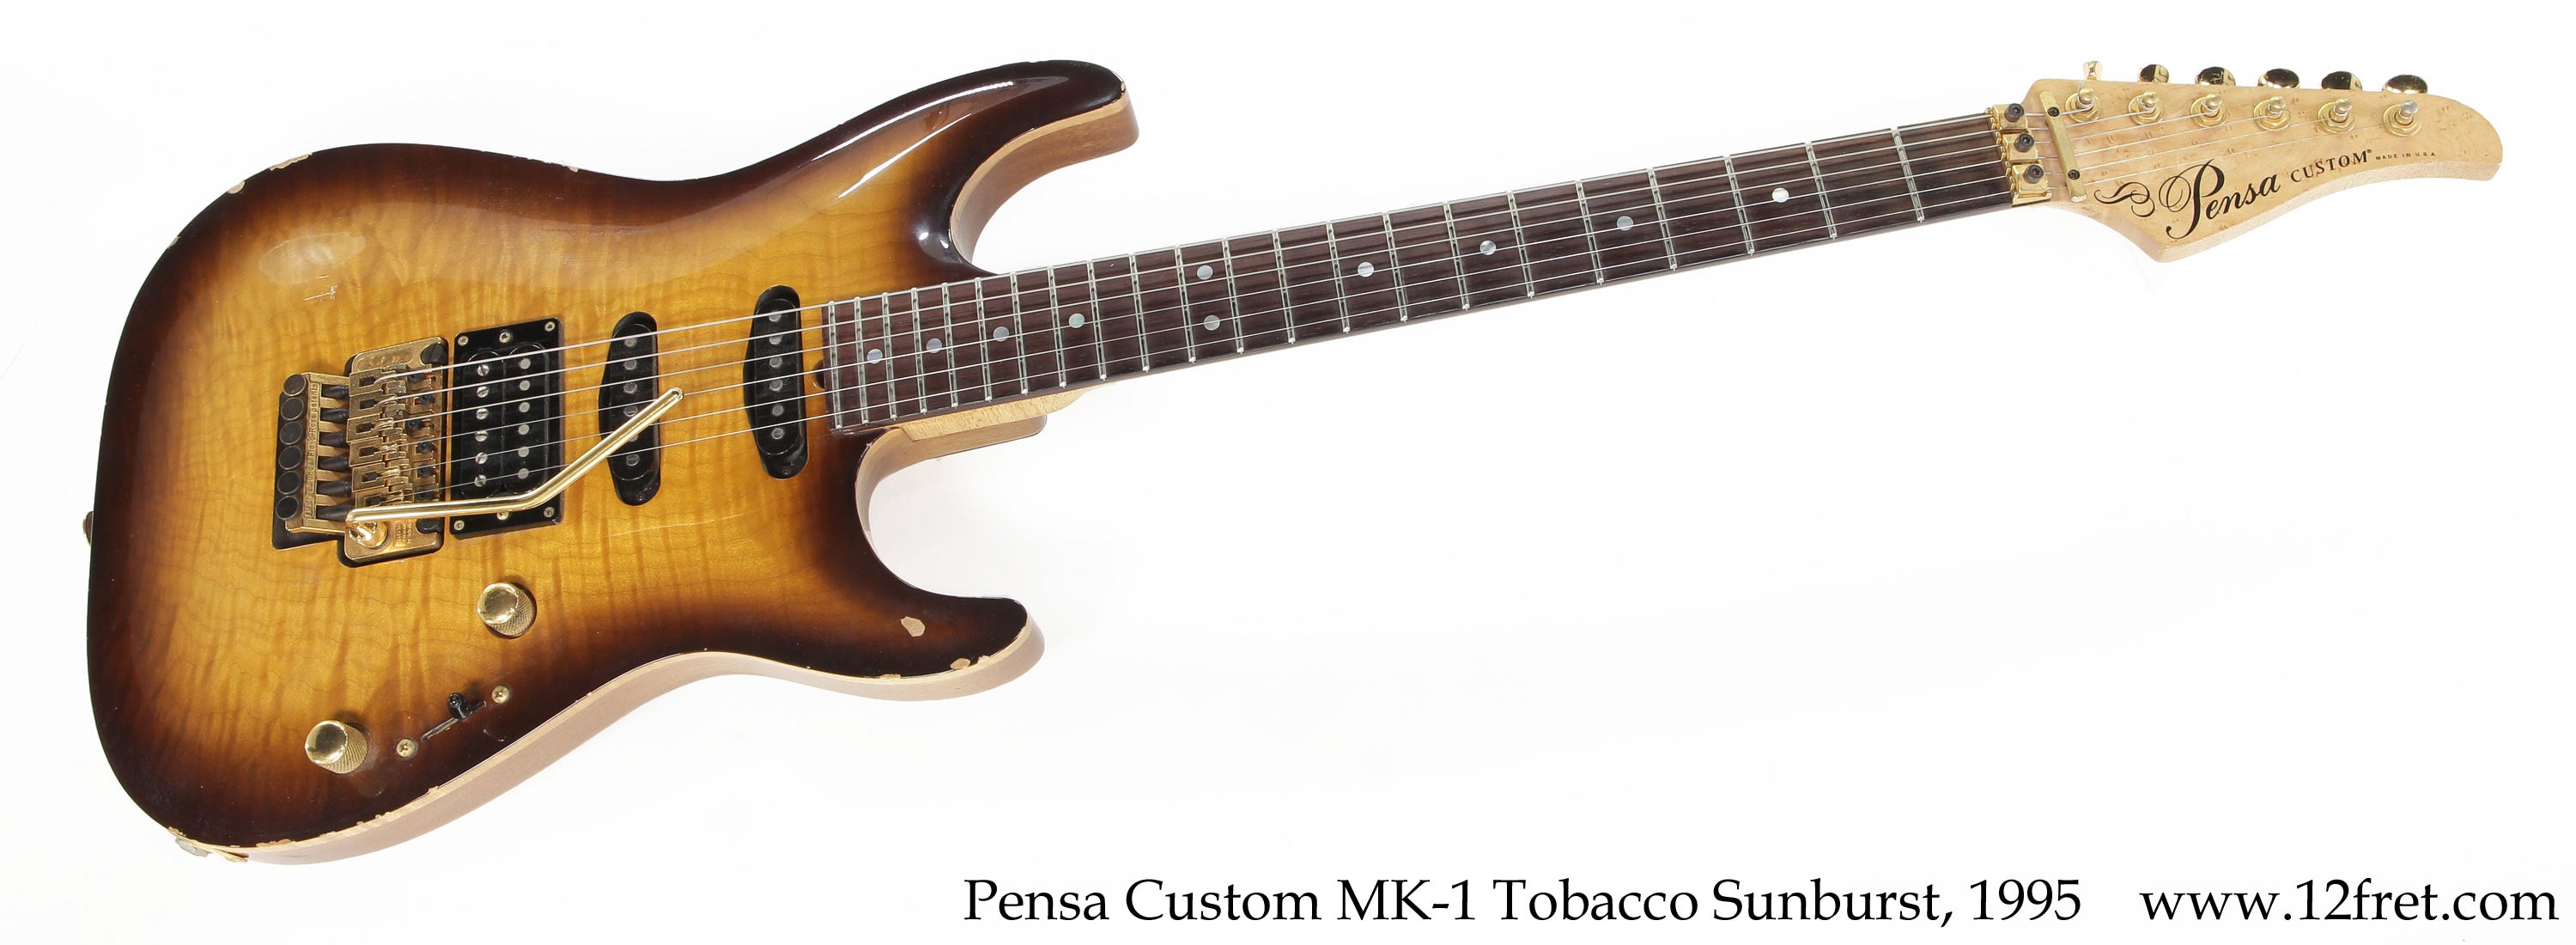 Pensa Custom MK-1 Tobacco Sunburst, 1995 - The Twelfth Fret